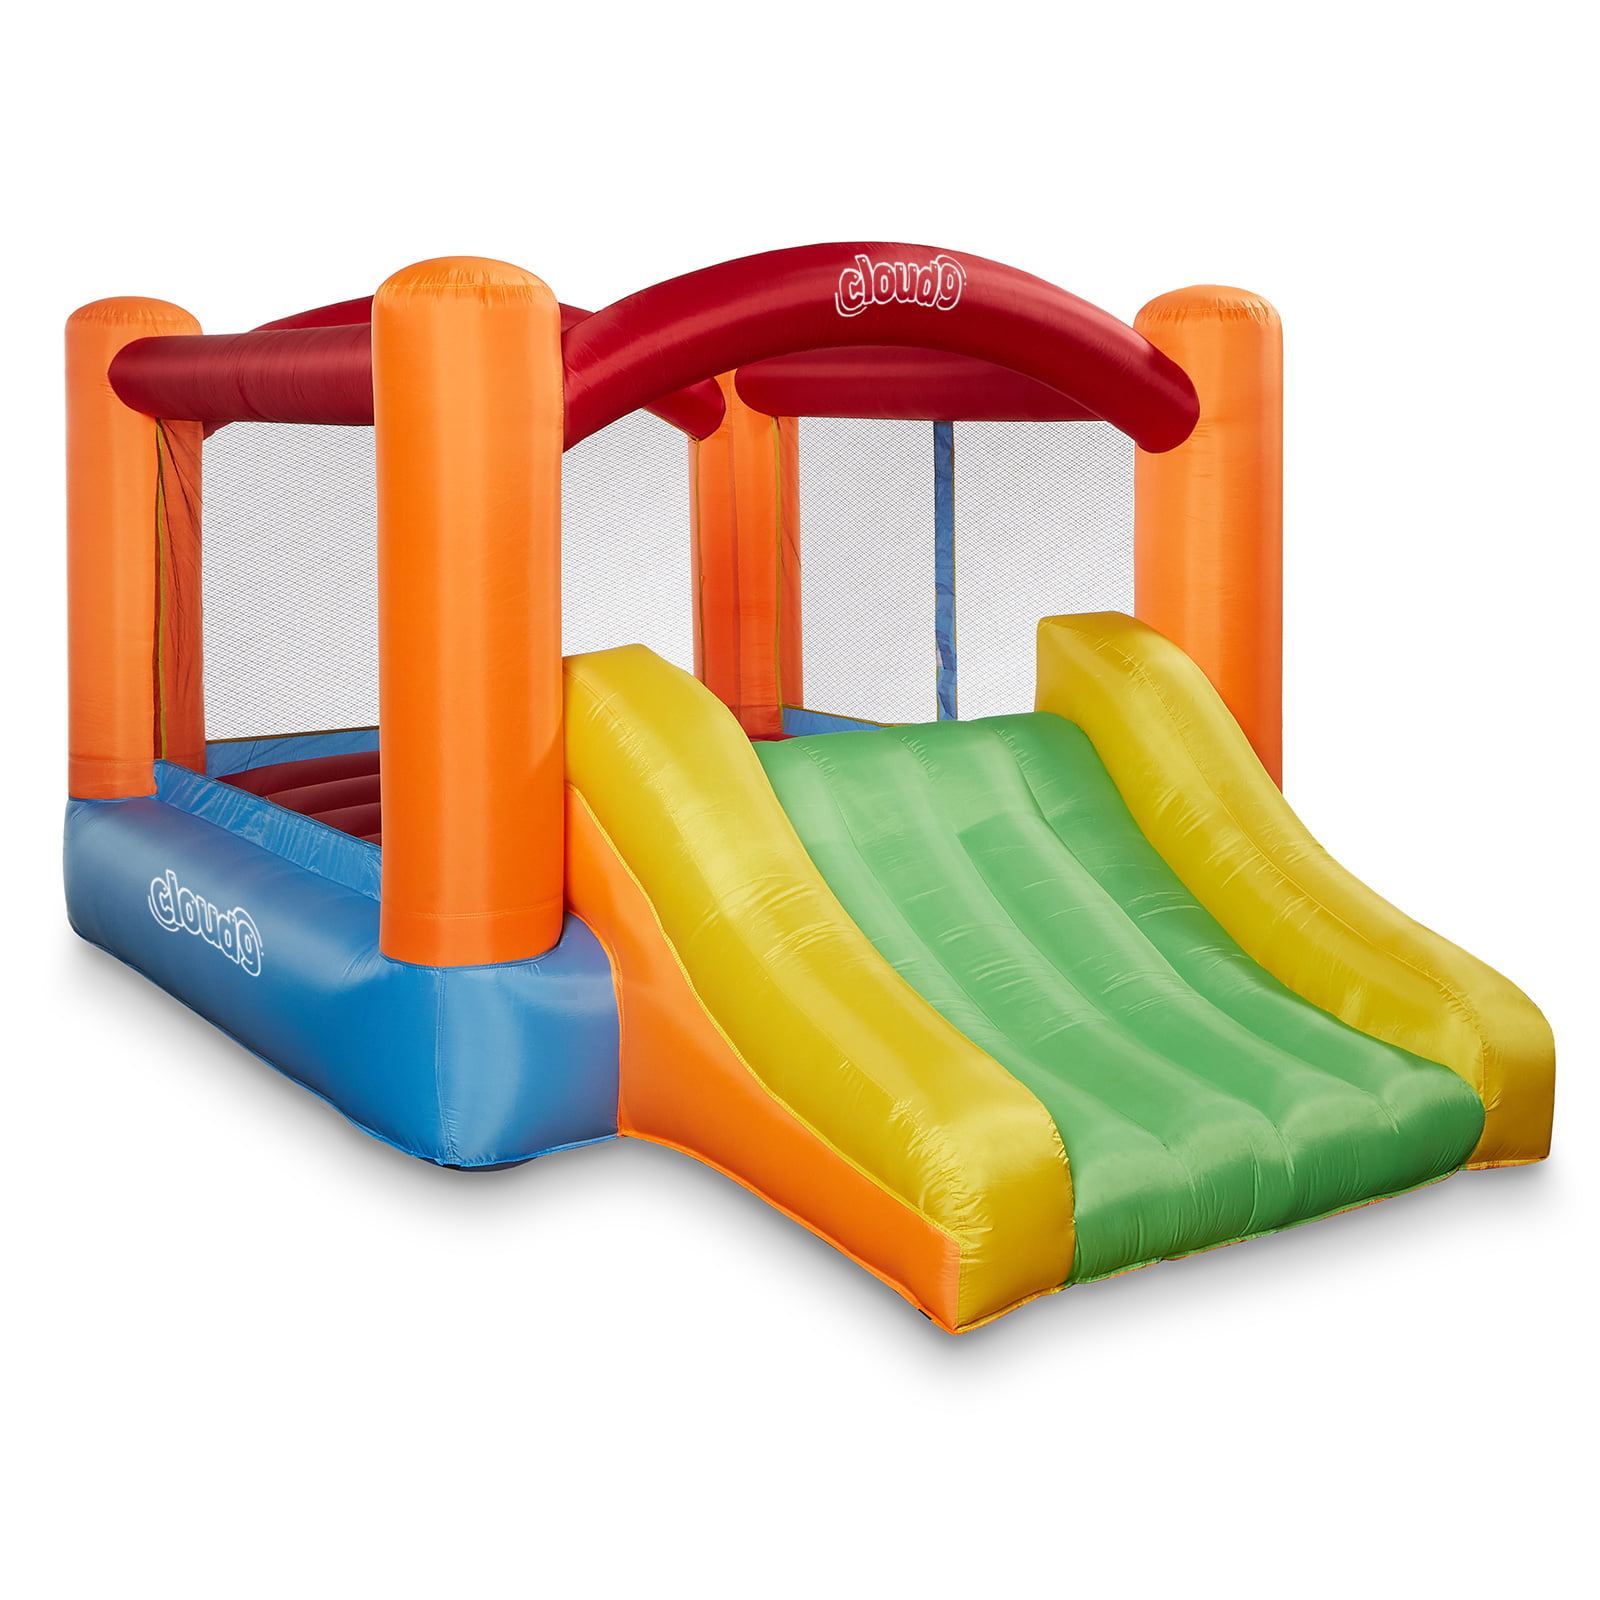 Inflatable Bounce House Castle Kids Moonwalk Jumper Slide Bouncer w/ 450W Blower 